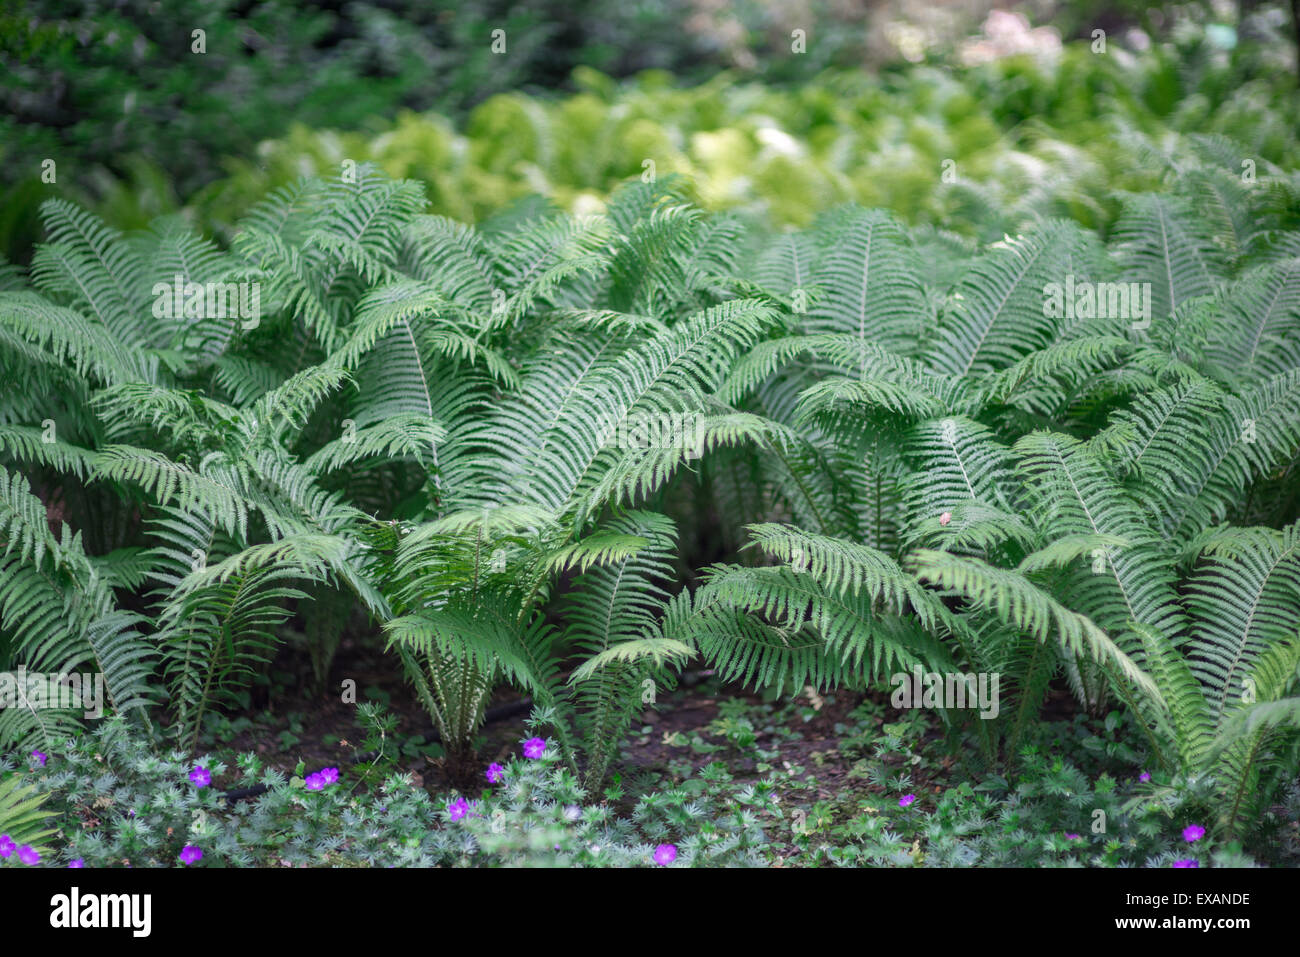 Many lush green ferns Stock Photo